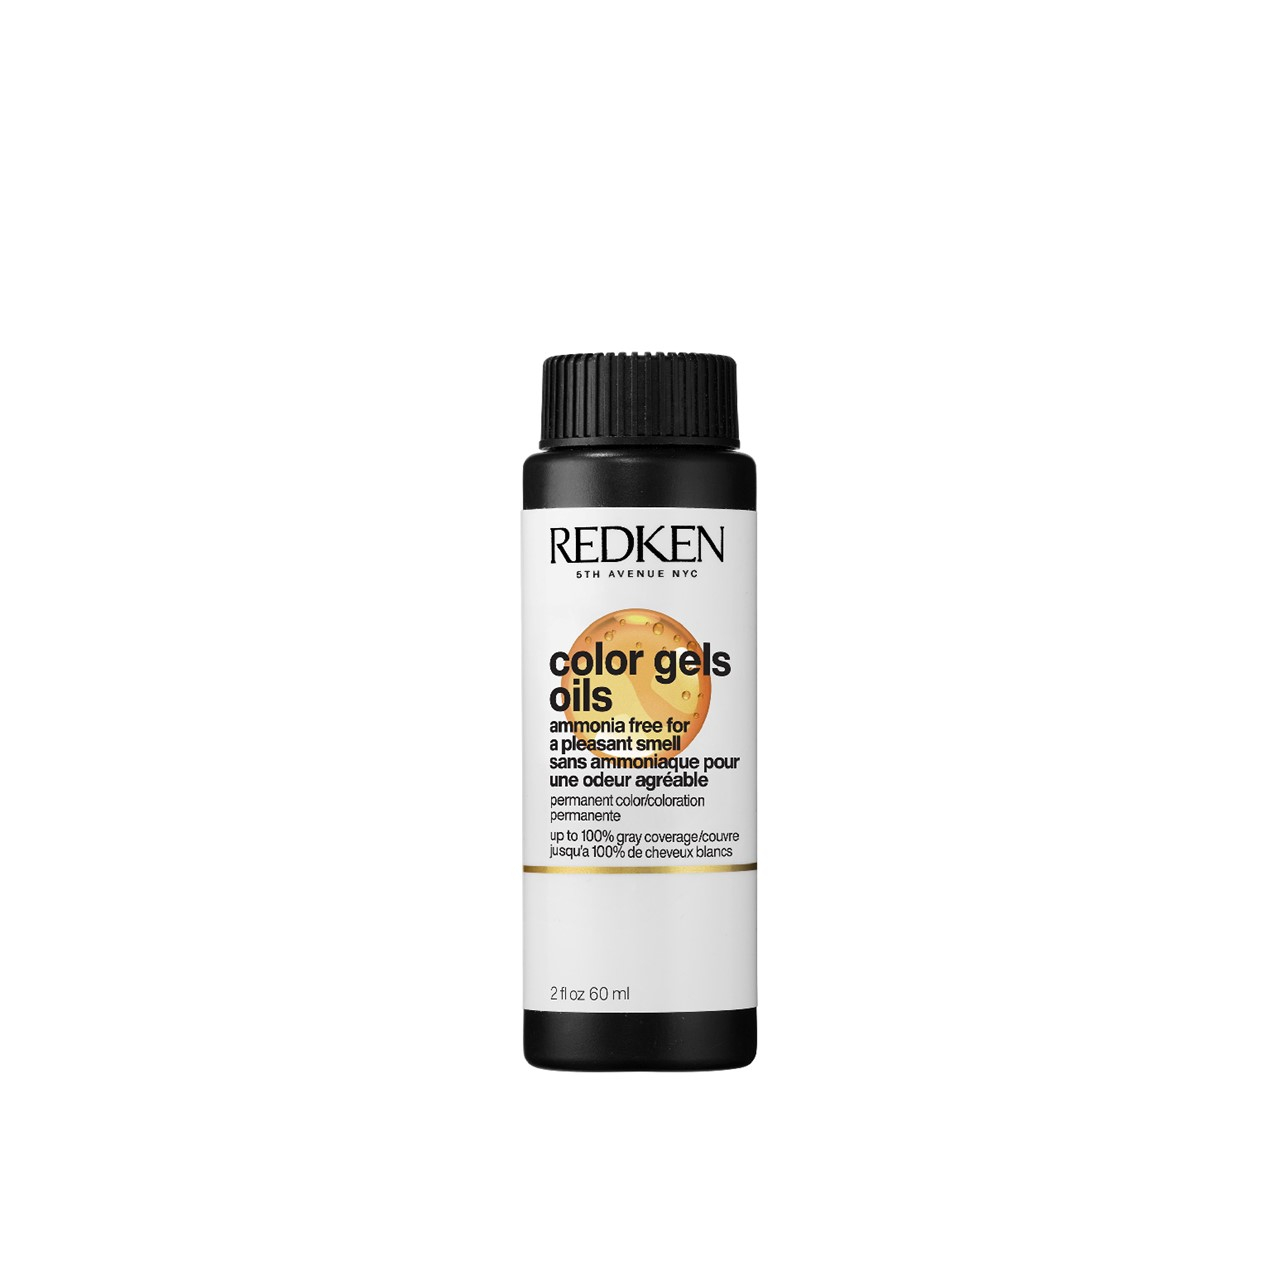 Redken Color Gels Oils 10P Ivory Pearl Permanent Hair Dye 60ml (2.03 fl oz)